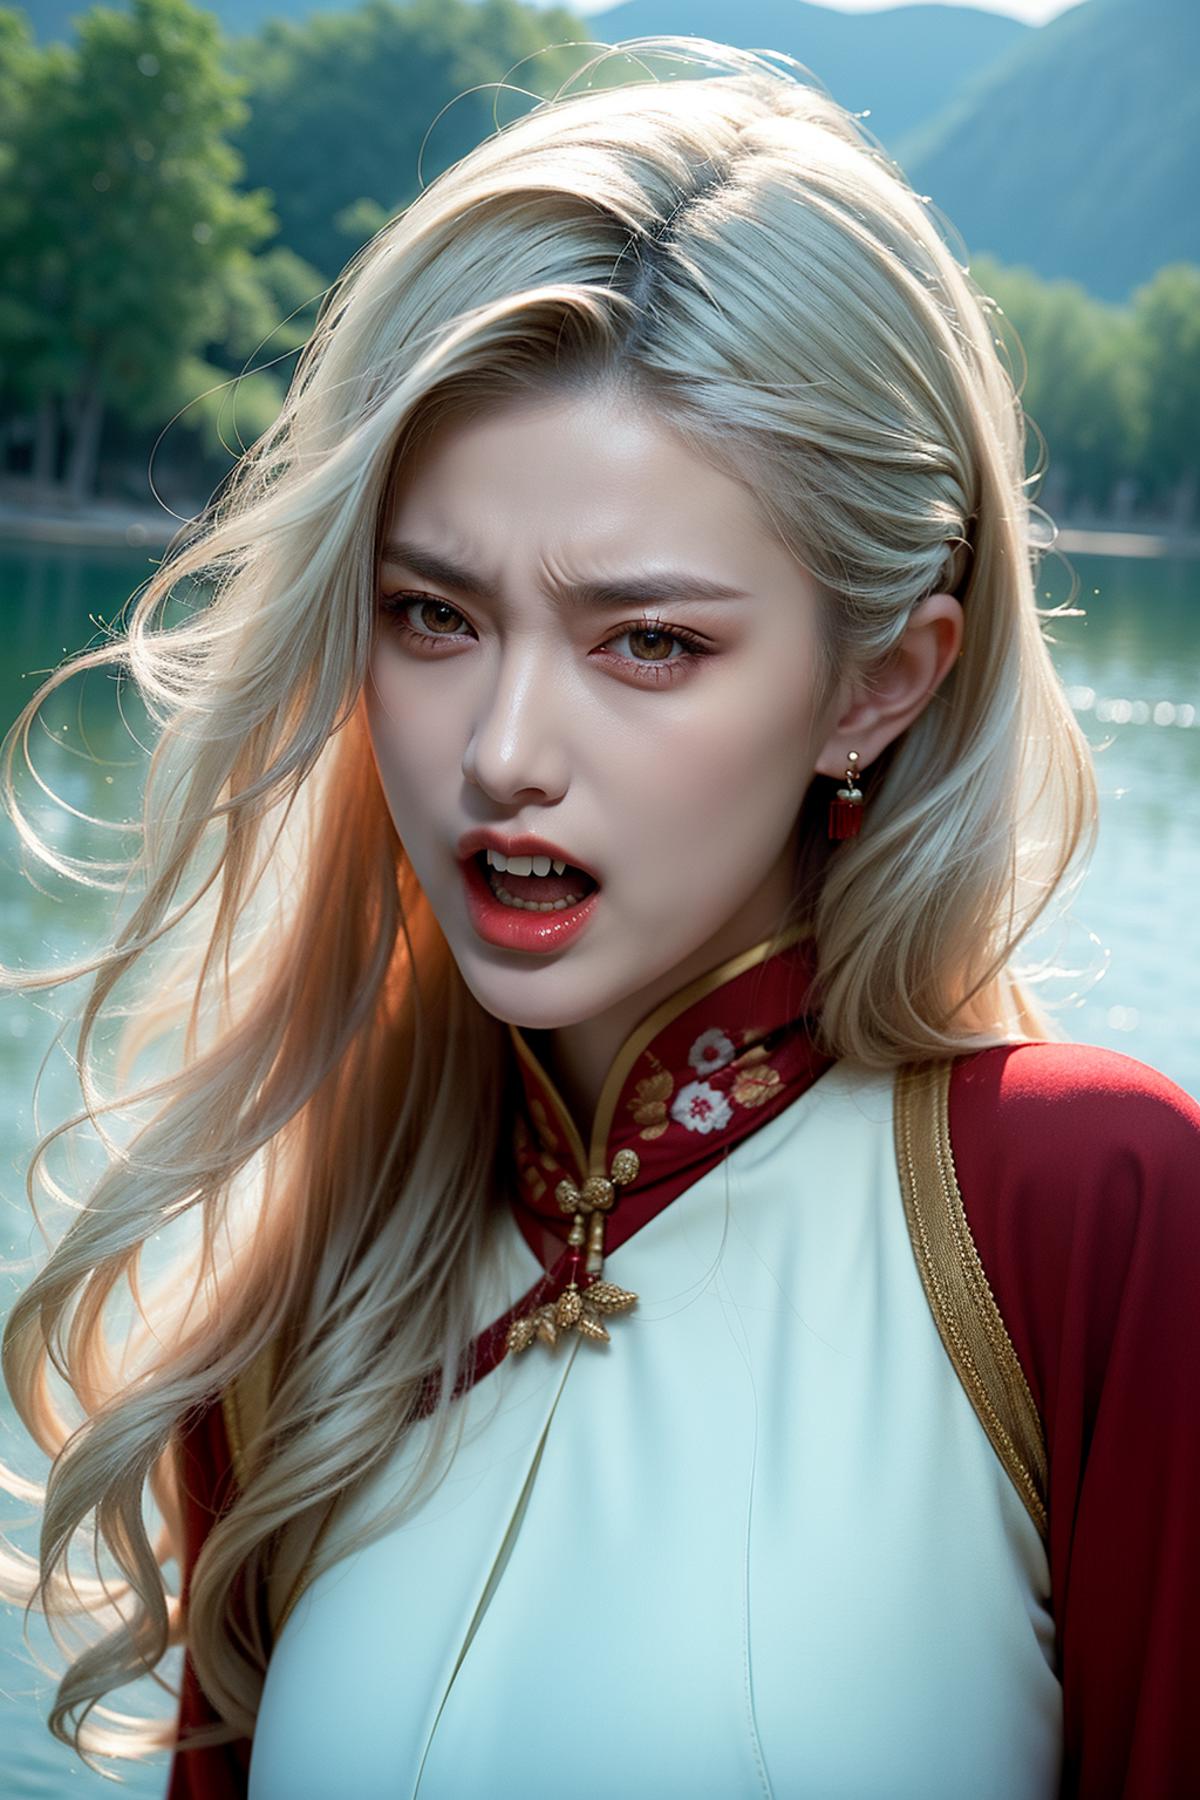 从此女三有了脸vampire image by woshimadai